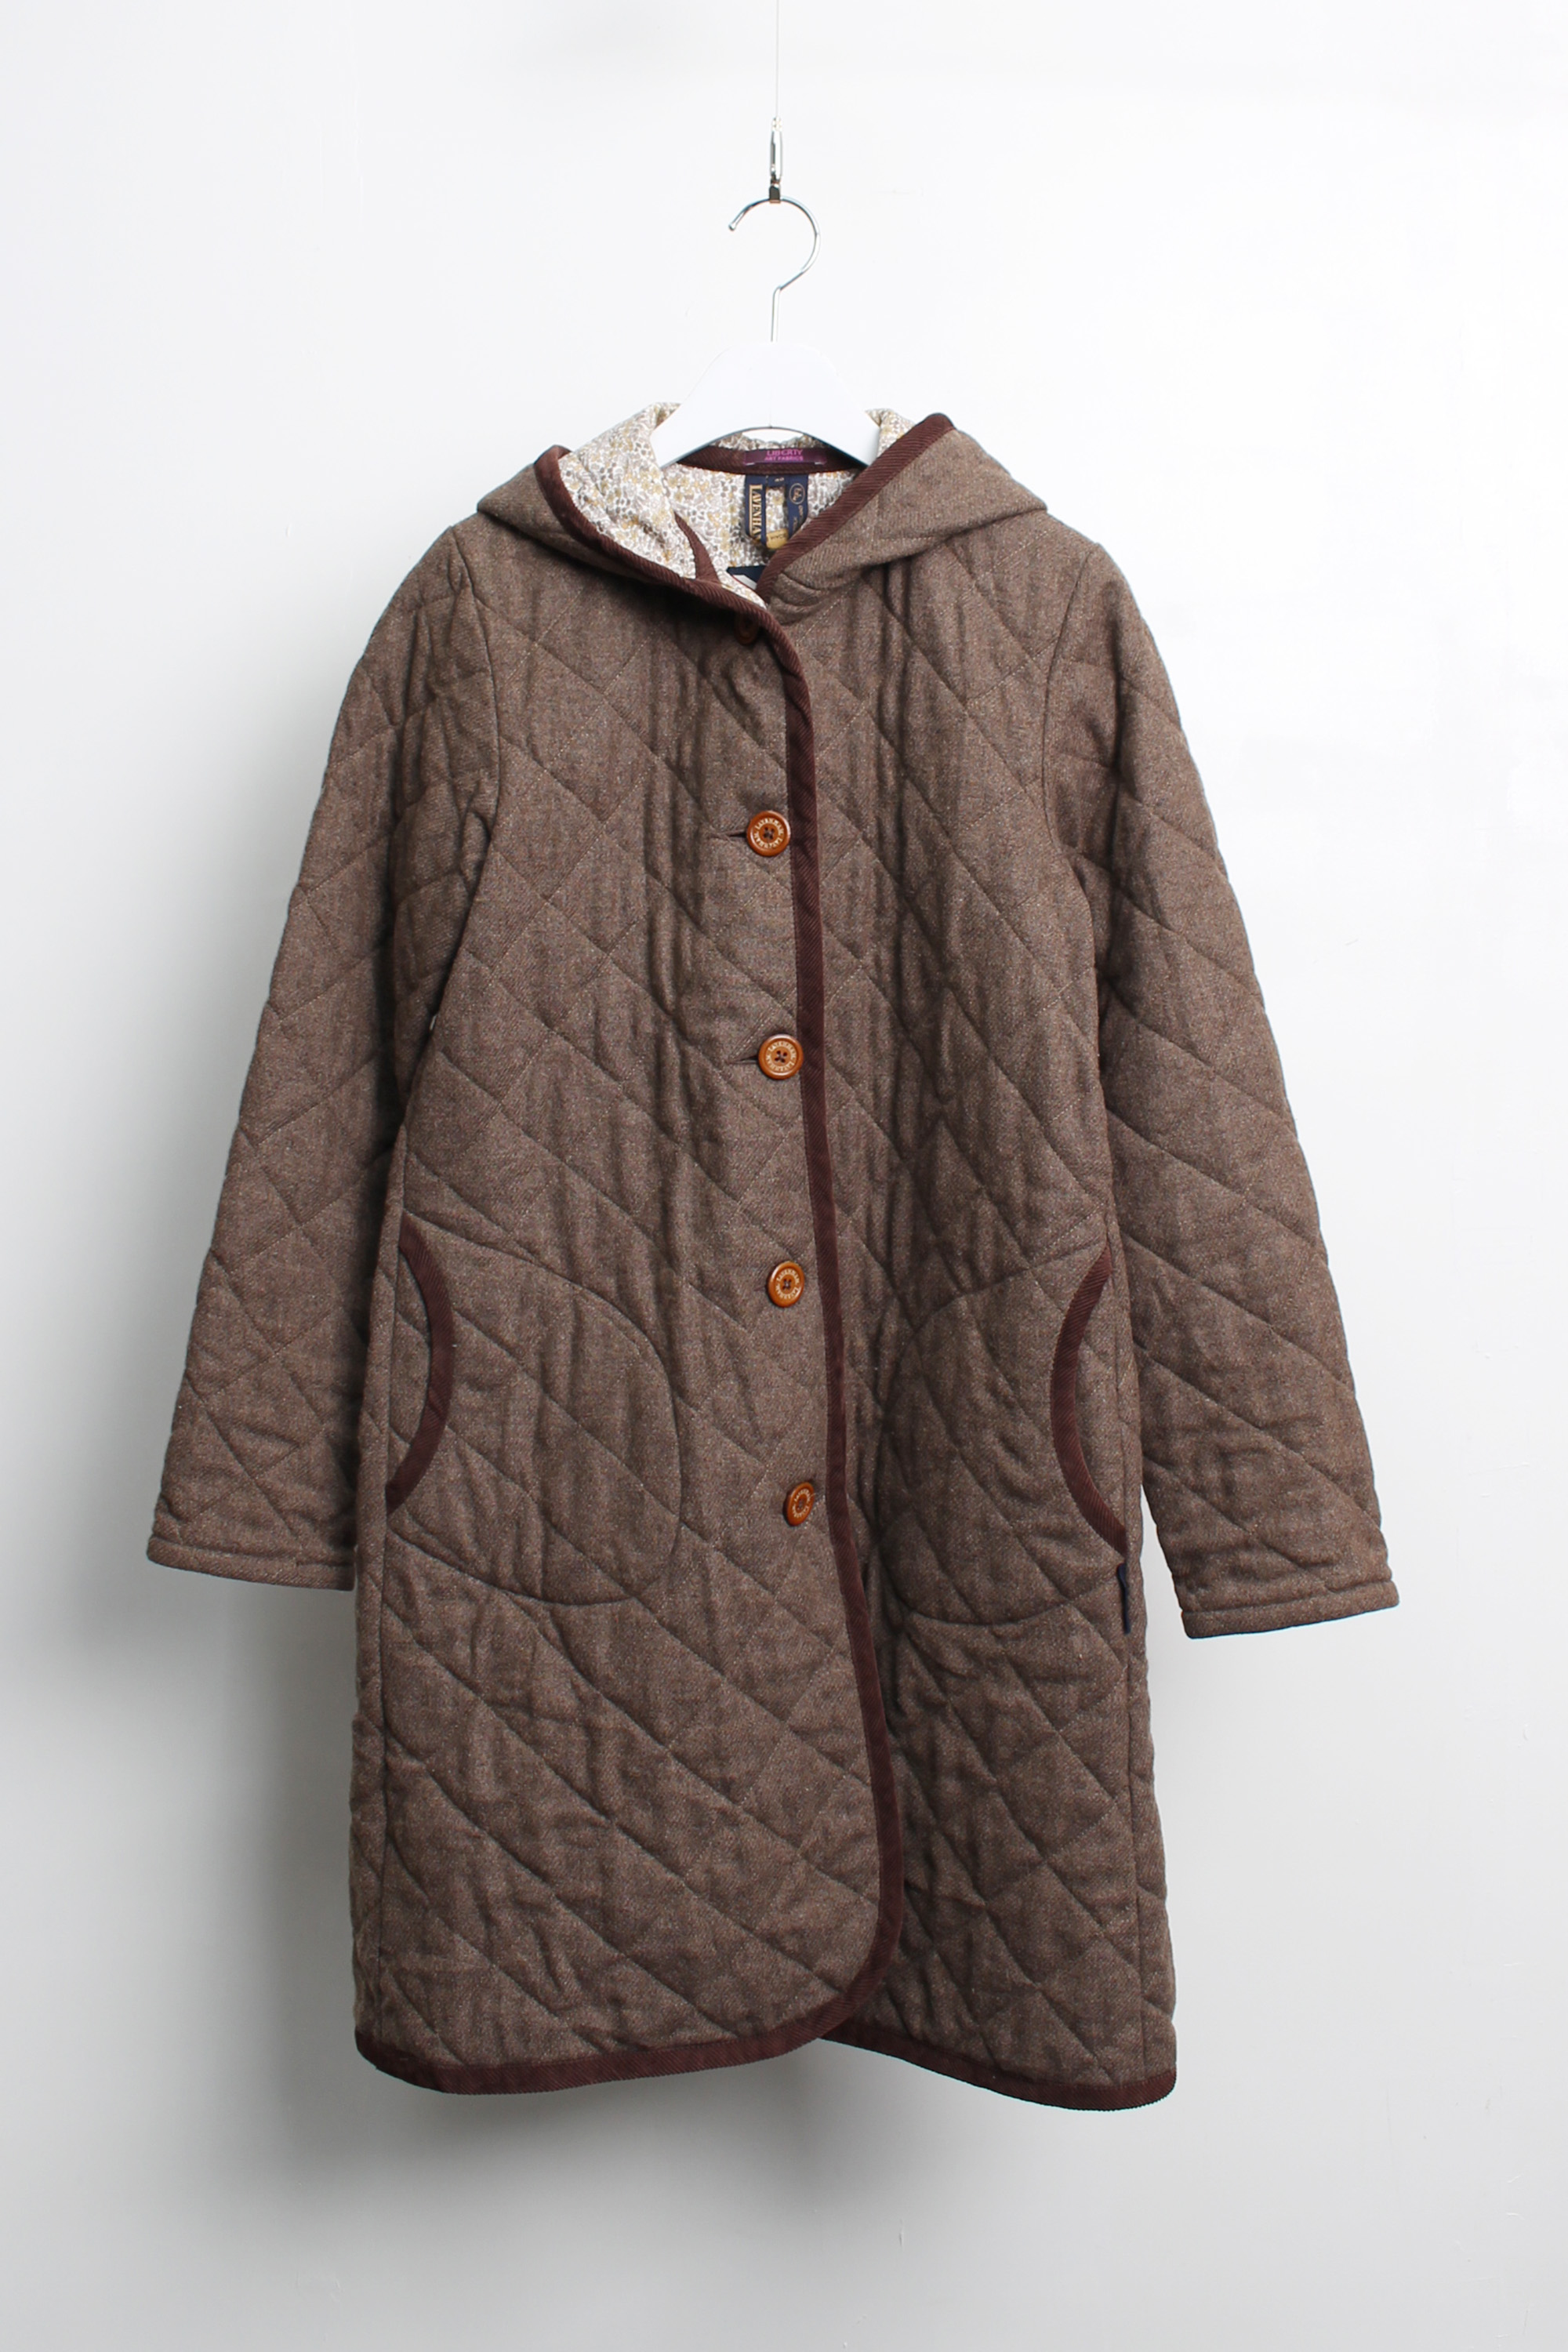 LAVENHAM x LIBERTY quilted coat